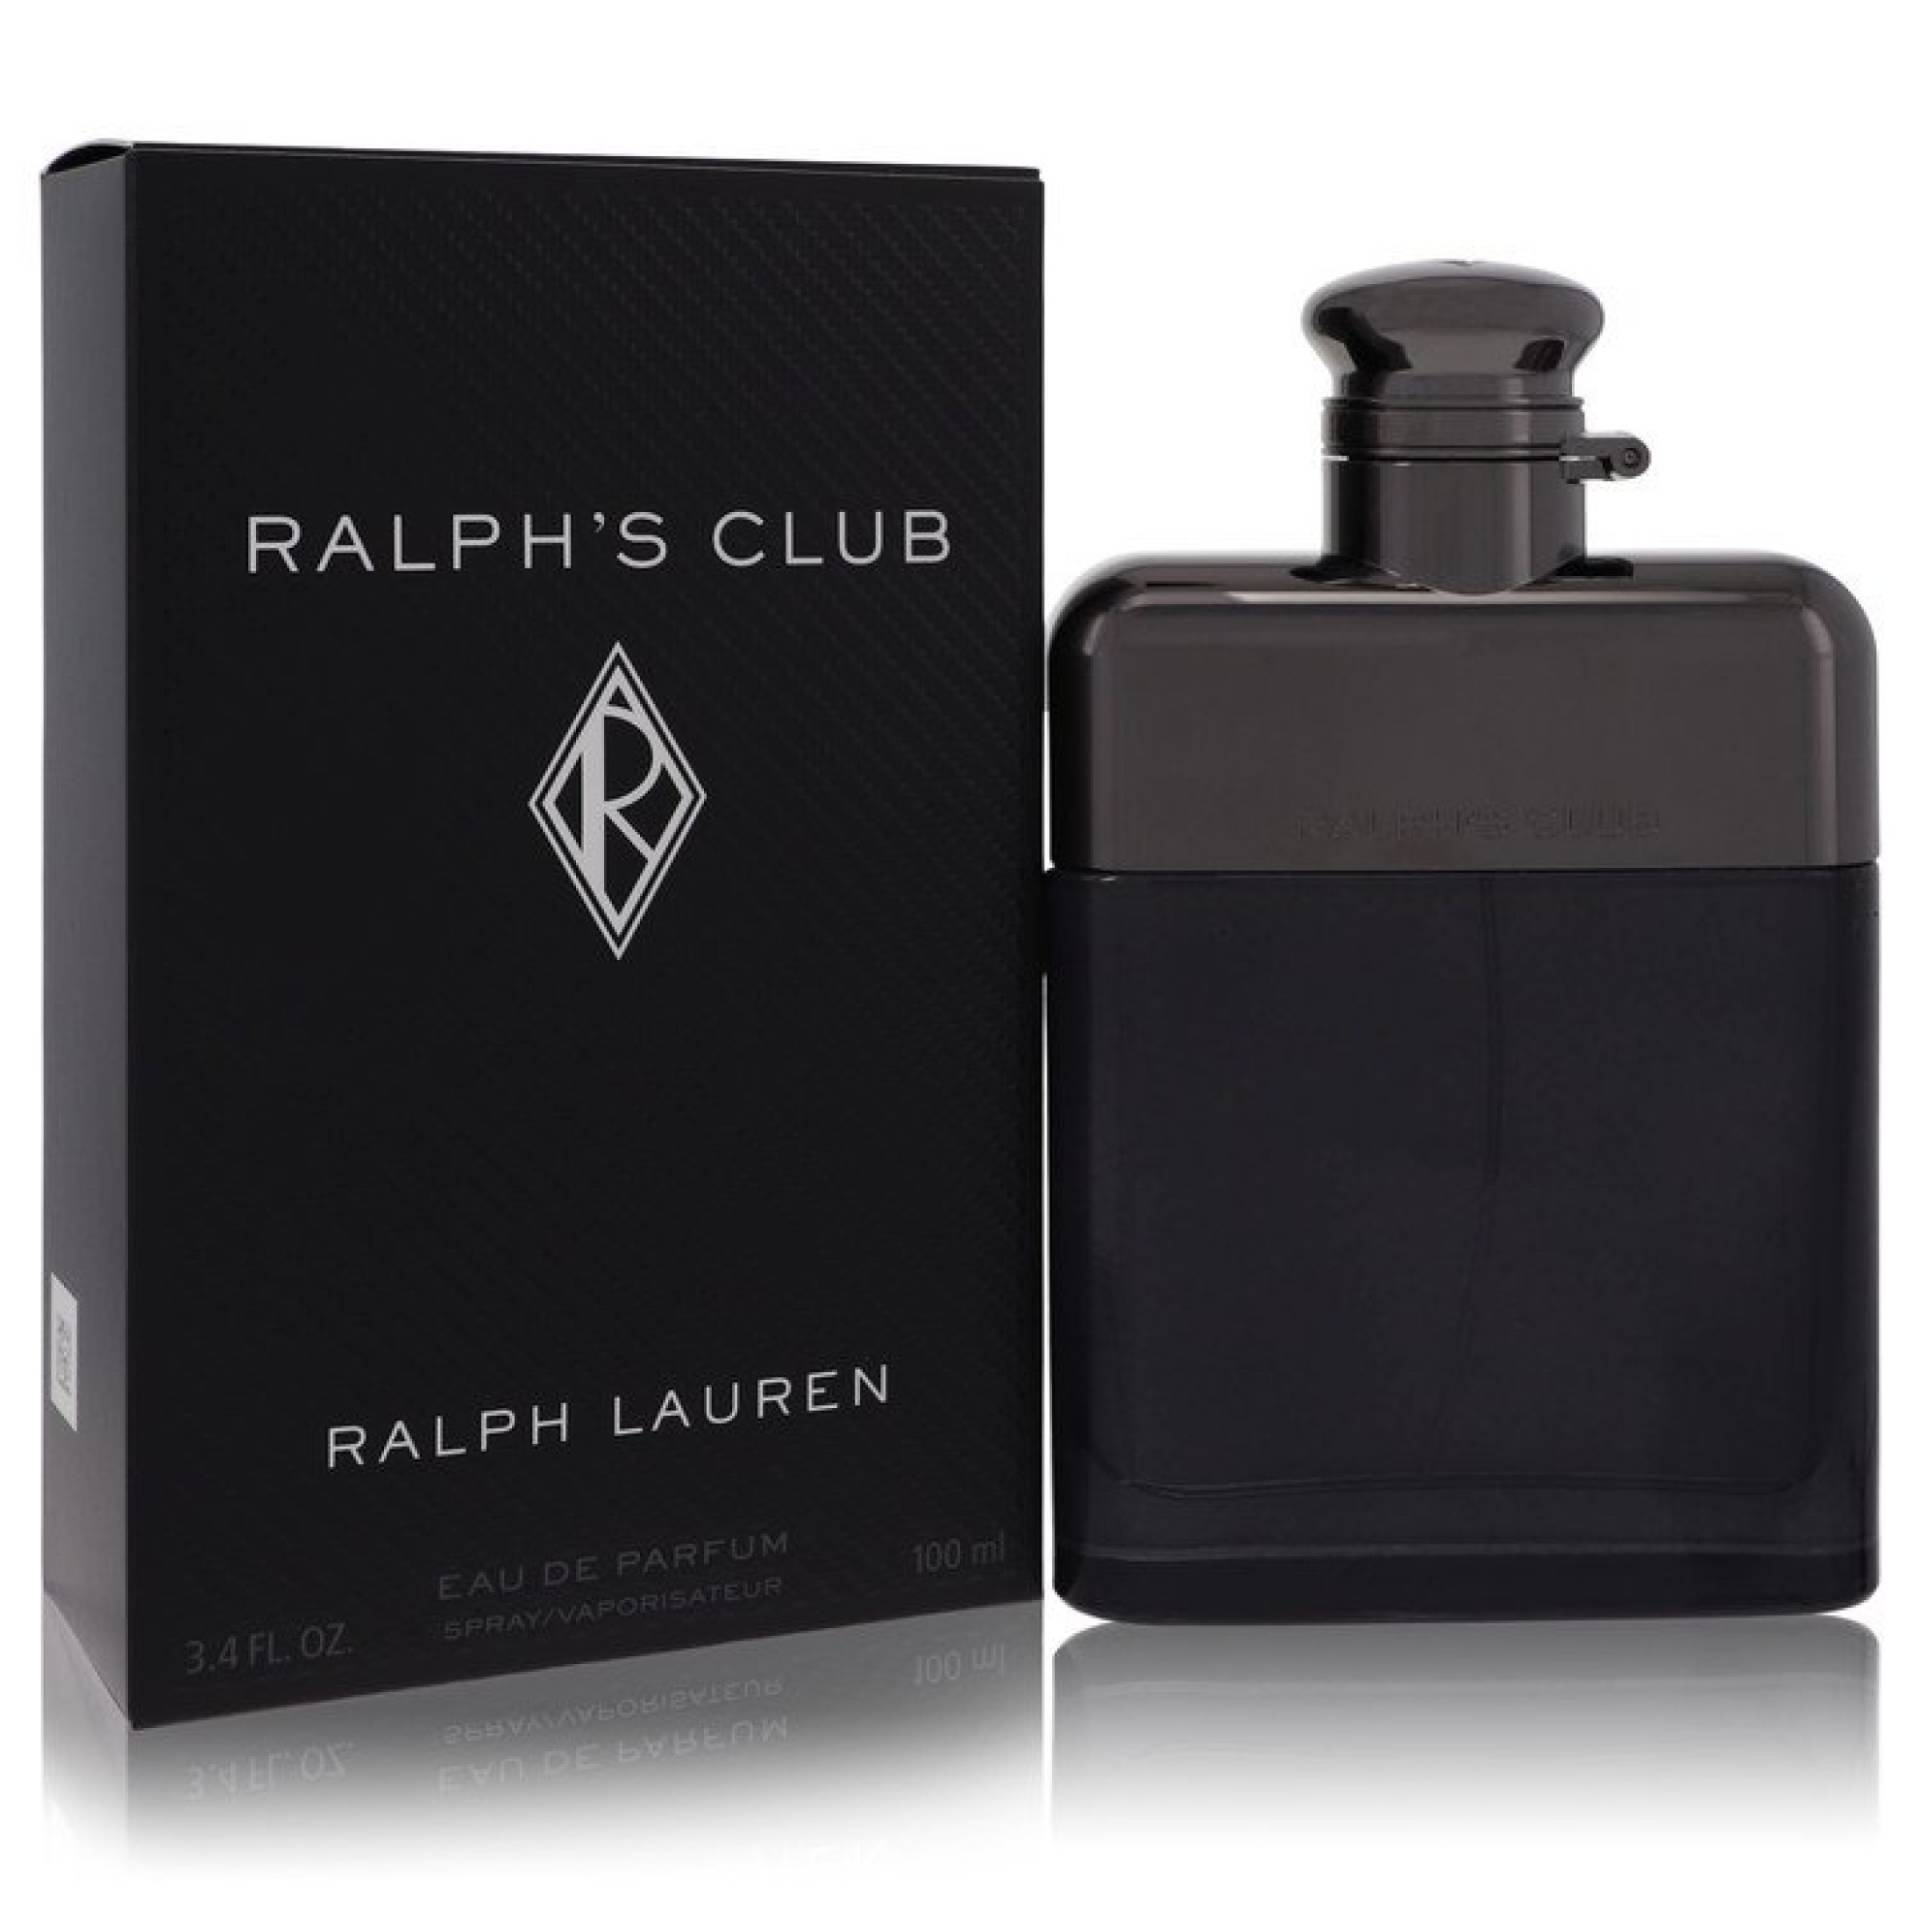 Ralph Lauren Ralph's Club Eau De Parfum Spray 100 ml von Ralph Lauren